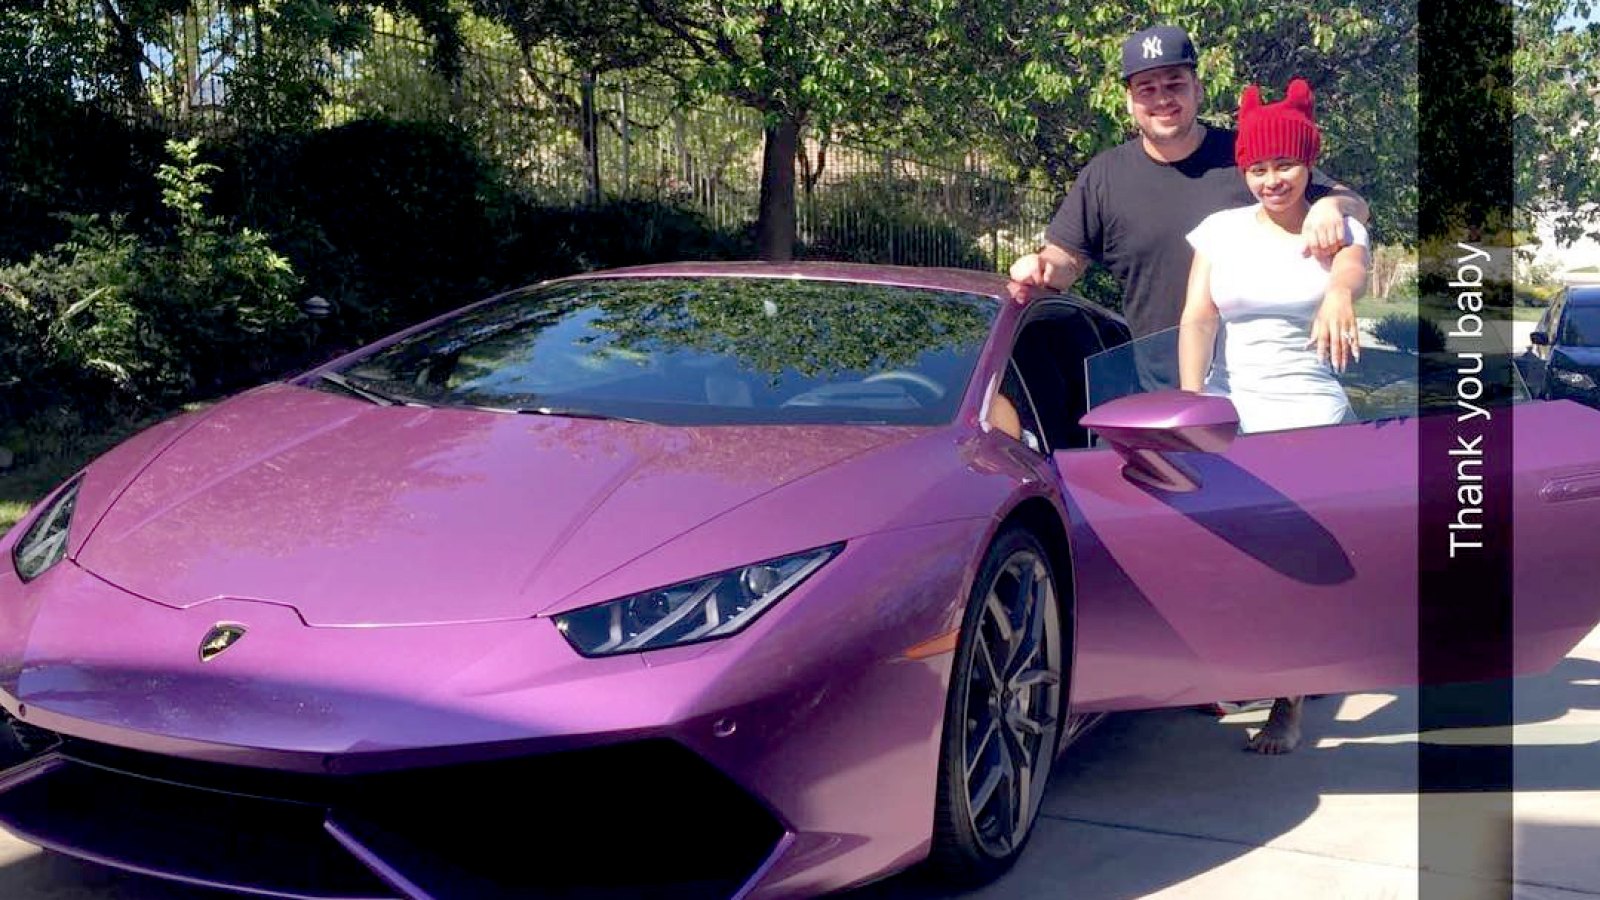 Rob Kardashian buys his fiancee Blac Chyna a purple Lamborghini.